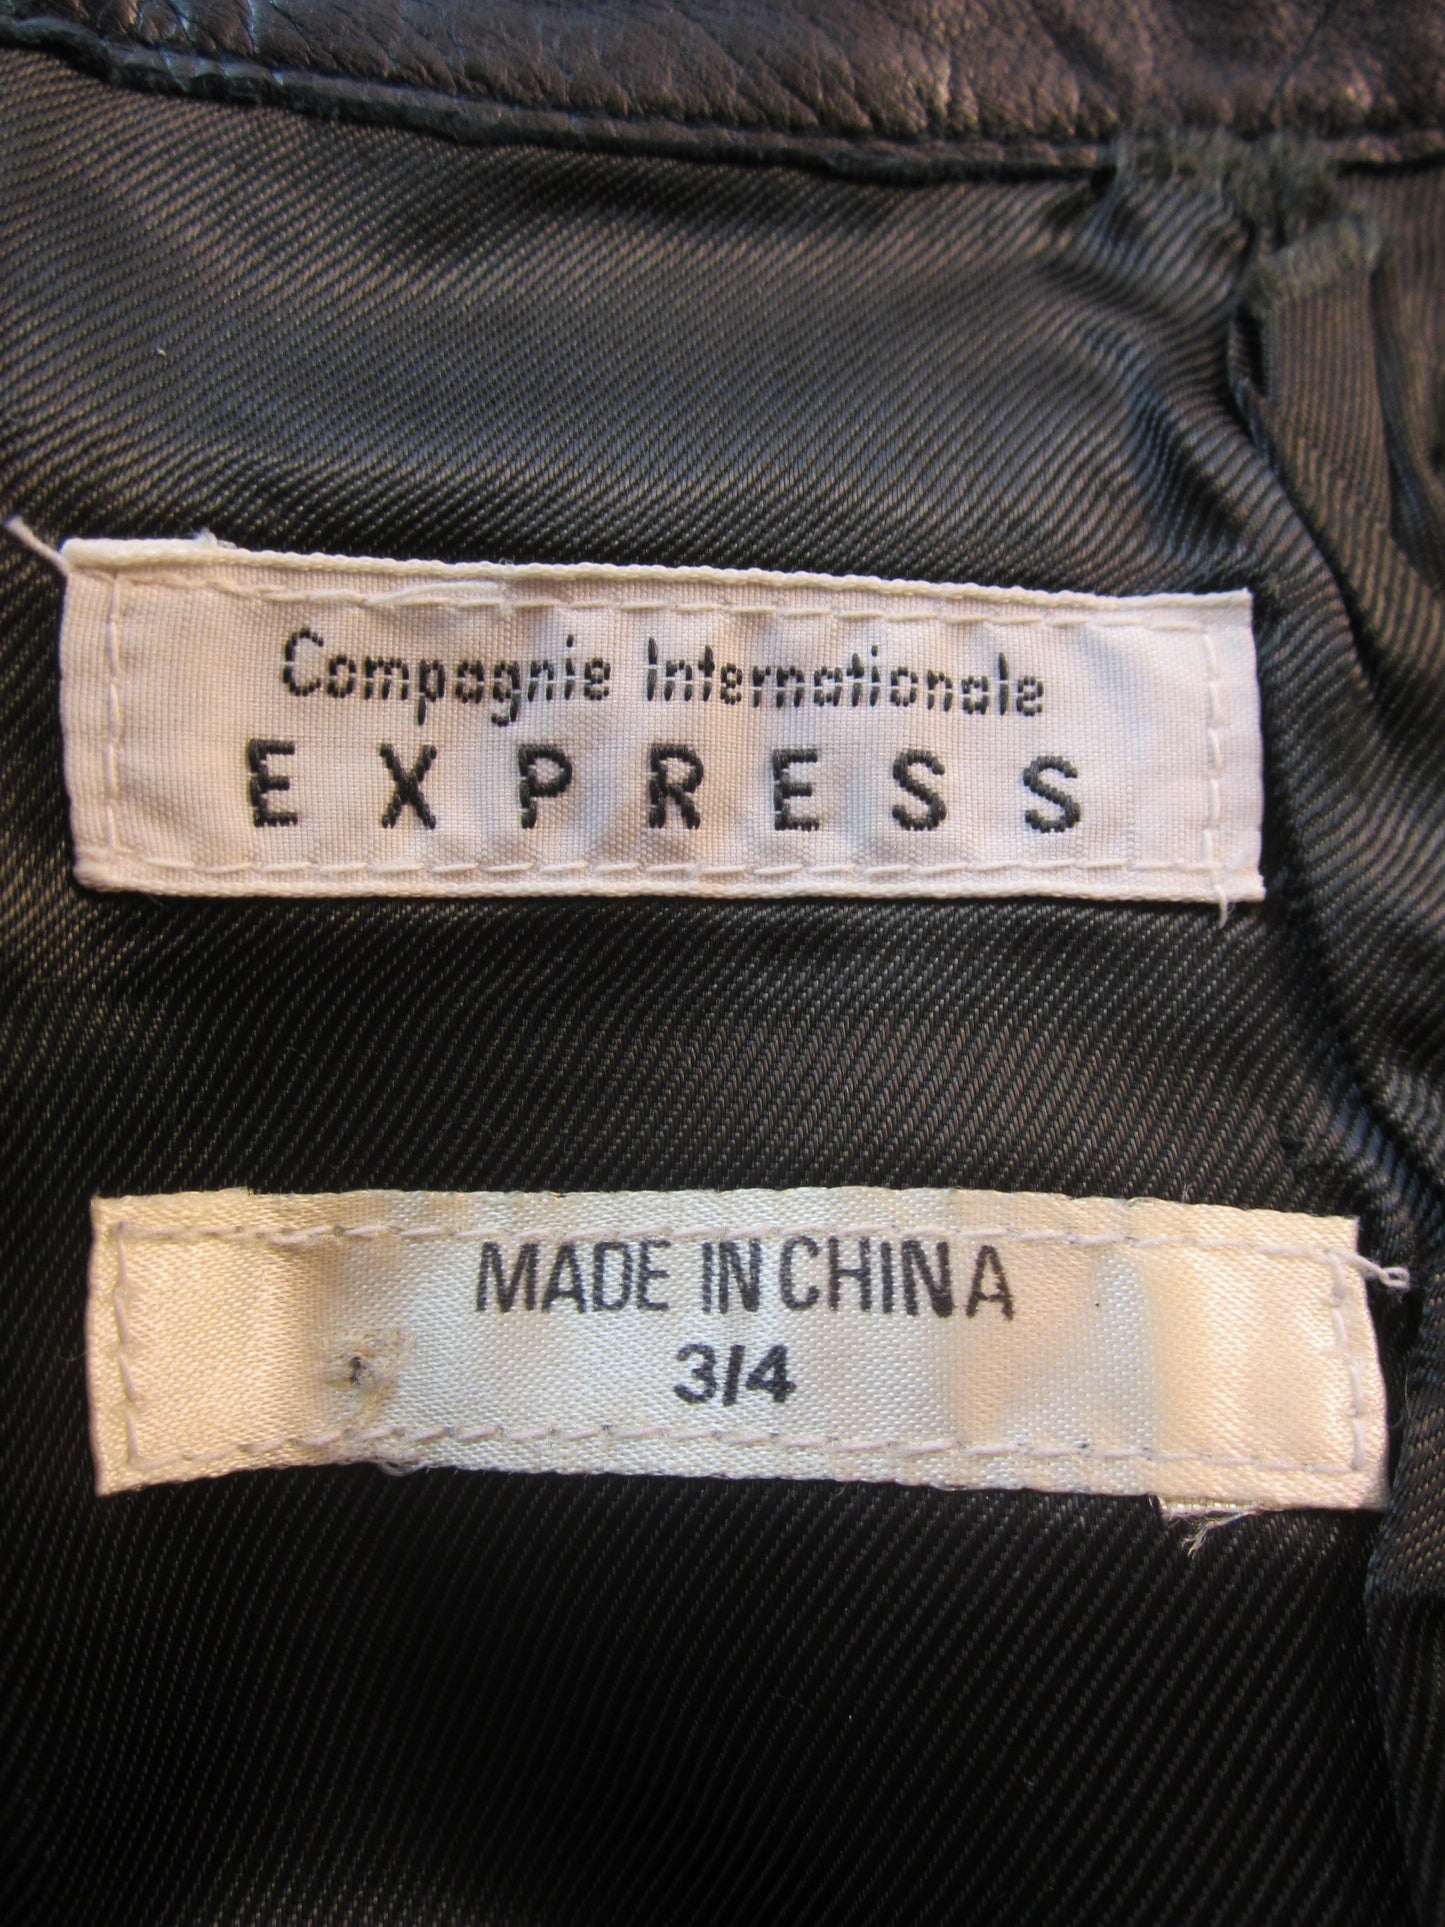 Express Leather Skirt Black Size 3/4 SKU 000103